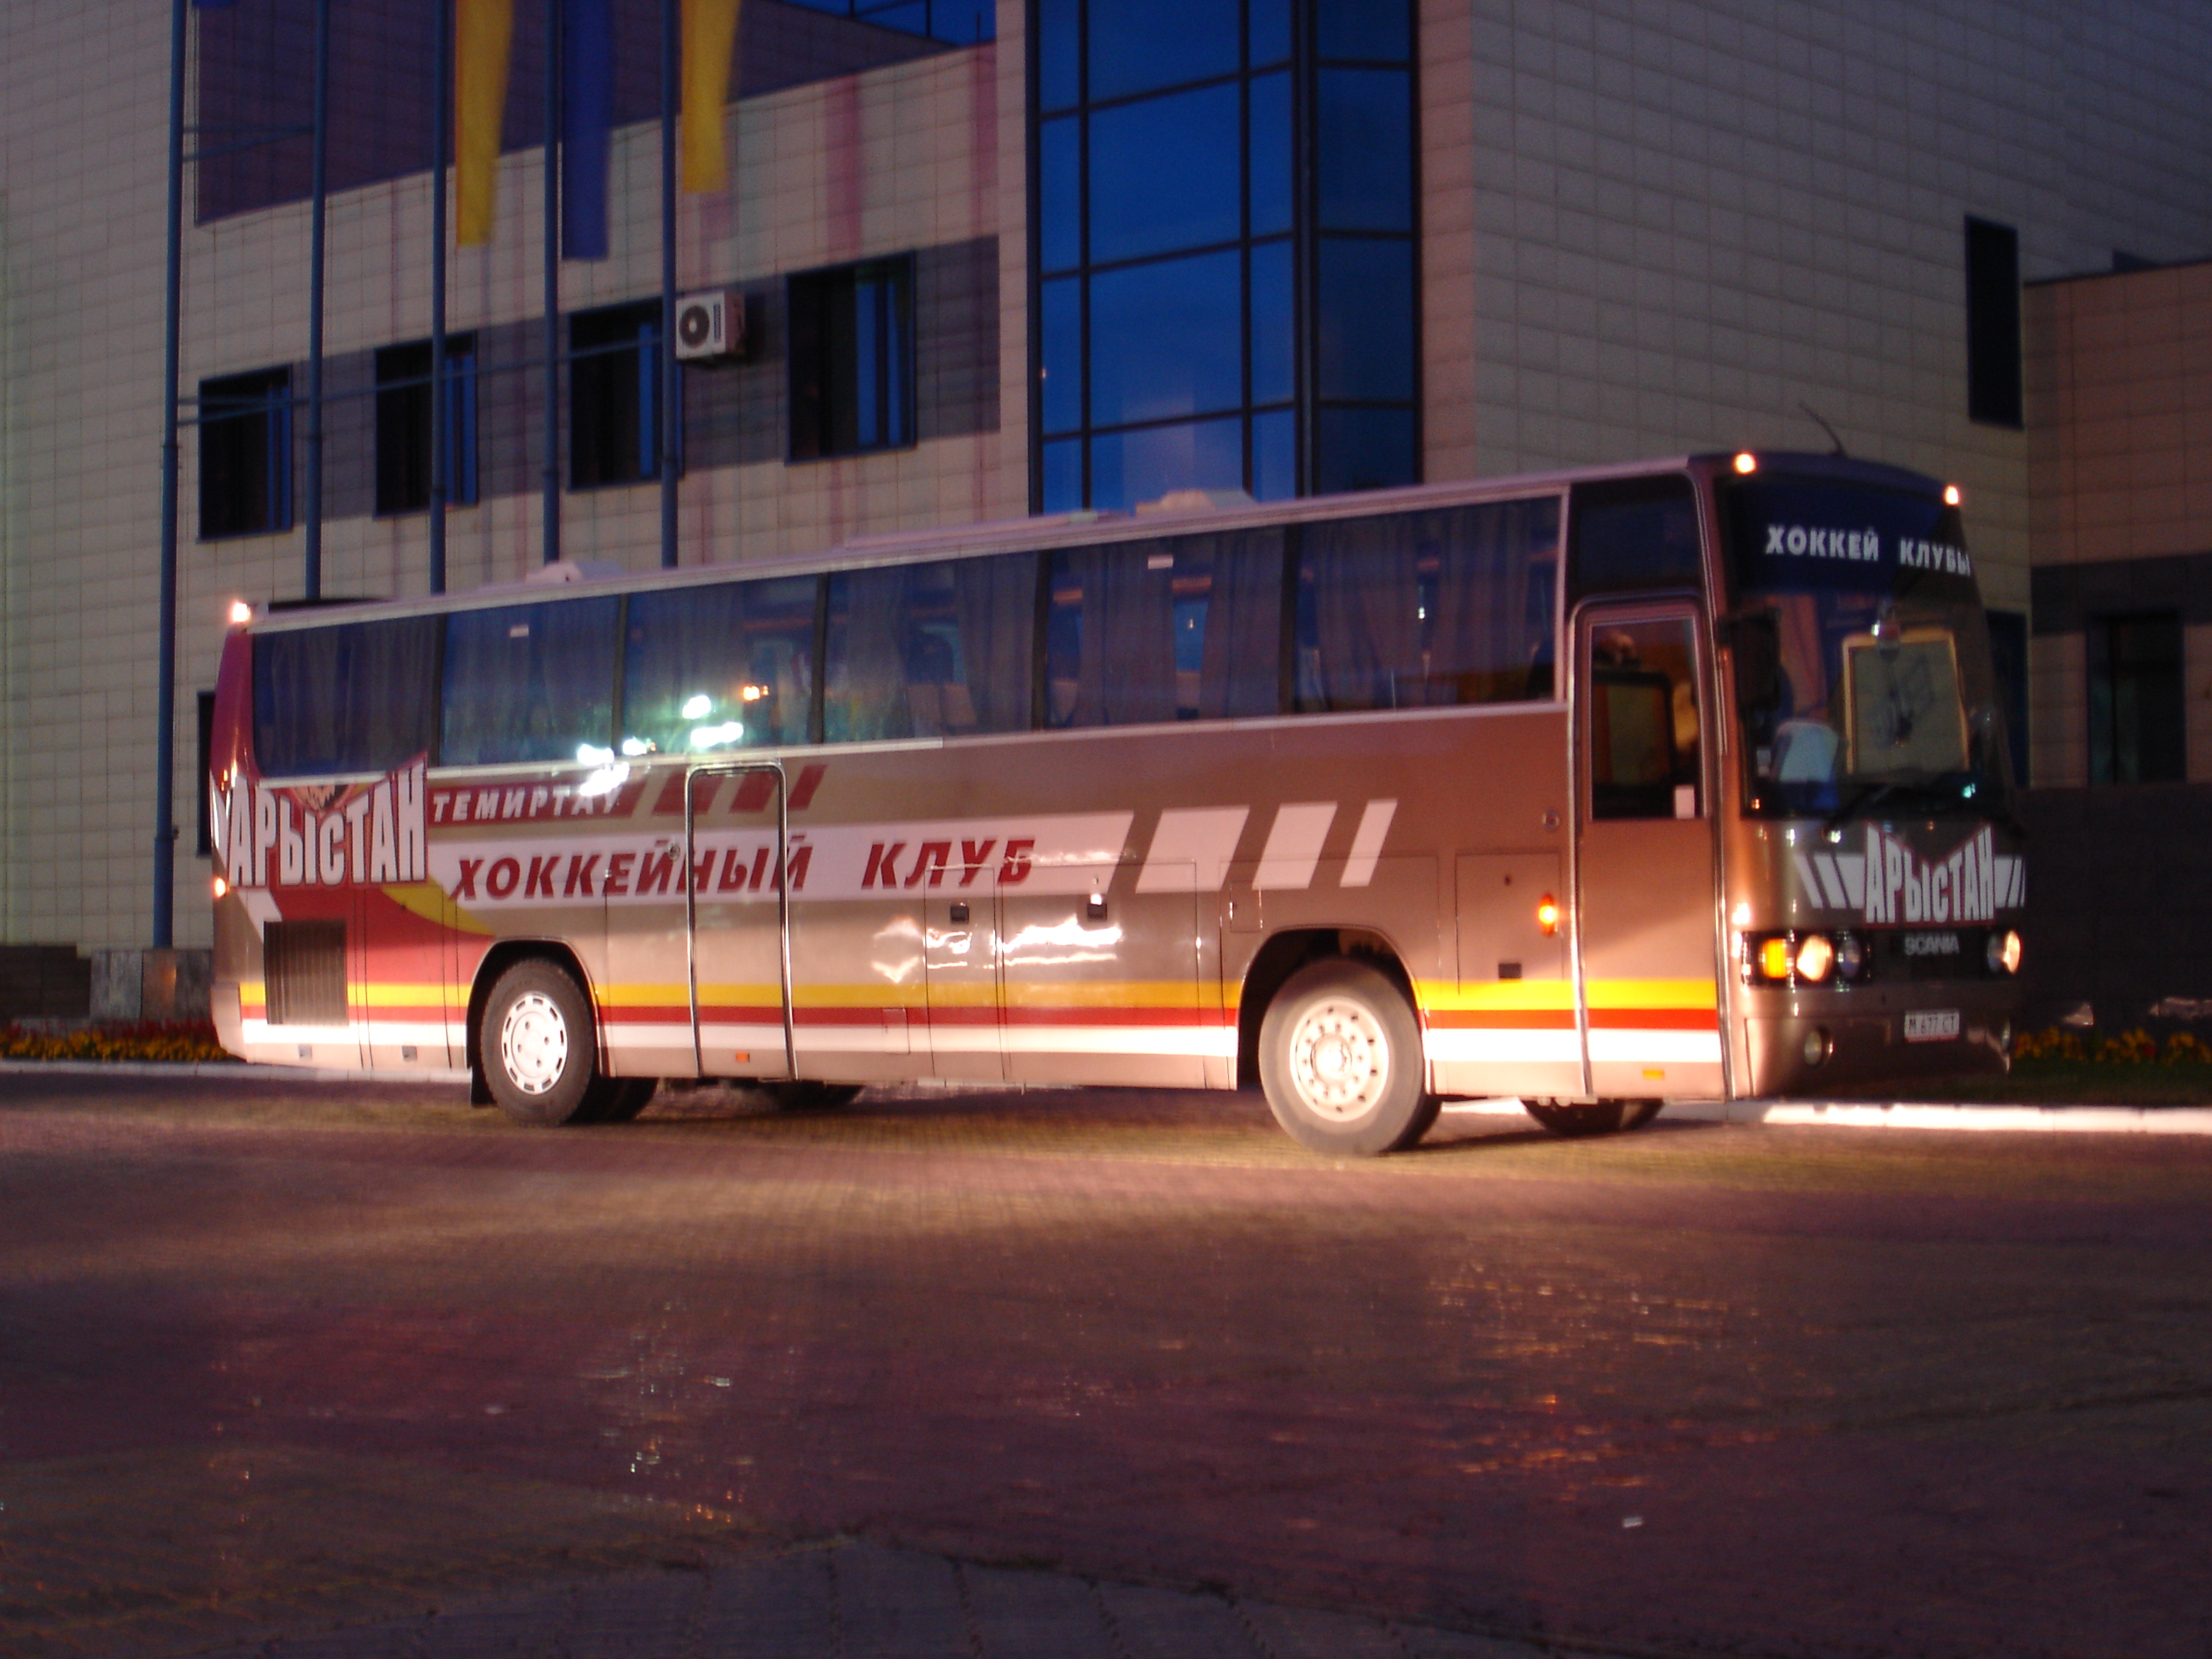 Hockey Bus